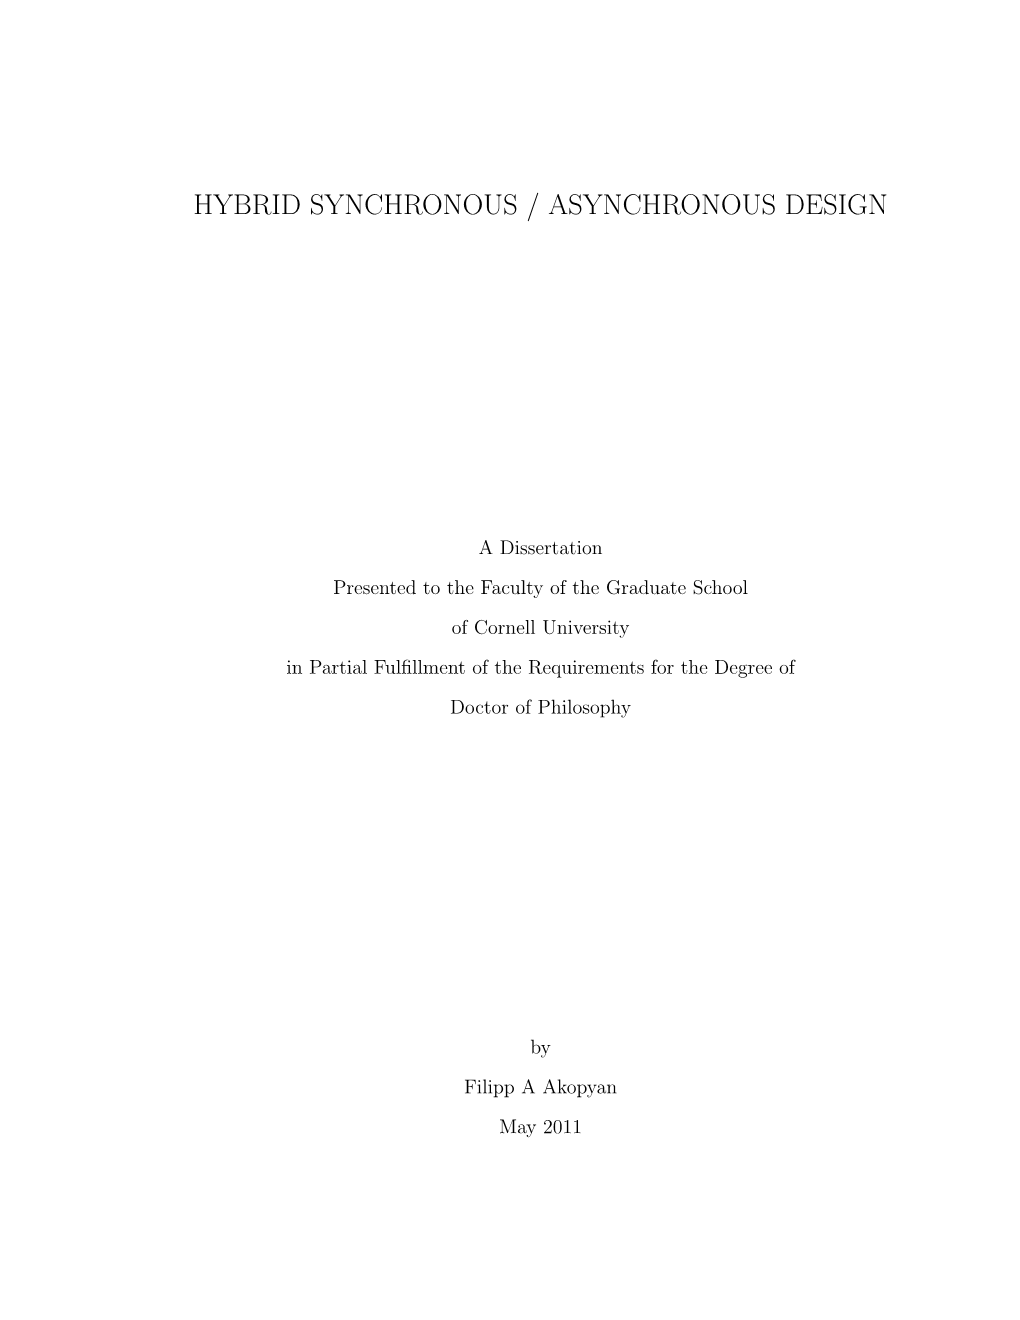 Hybrid Synchronous / Asynchronous Design